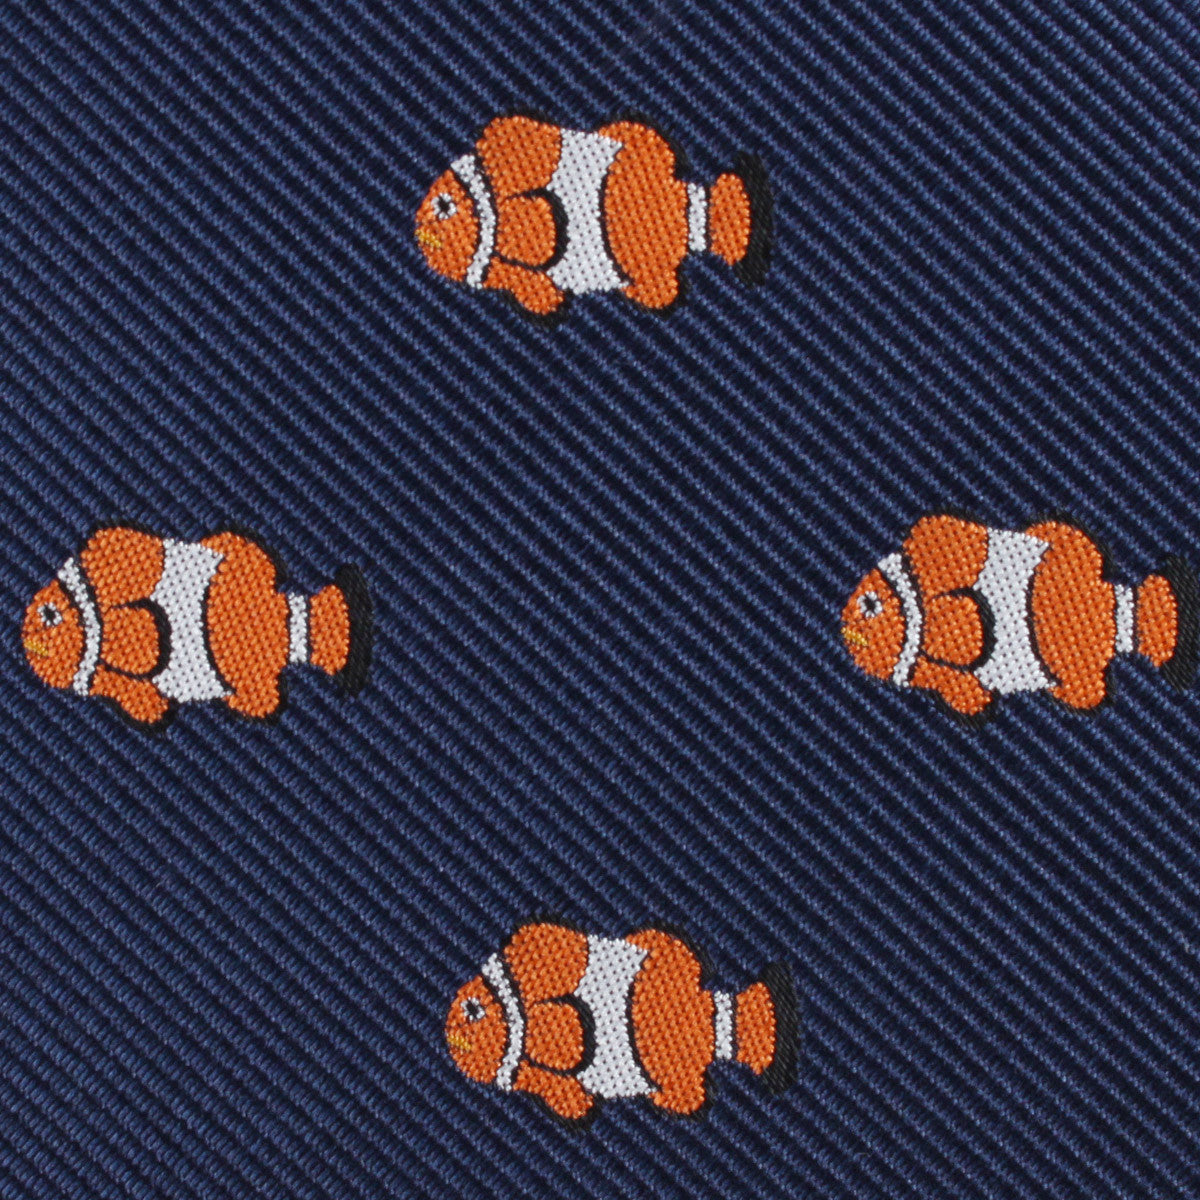 Clown Fish Fabric Self Diamond Bowtie